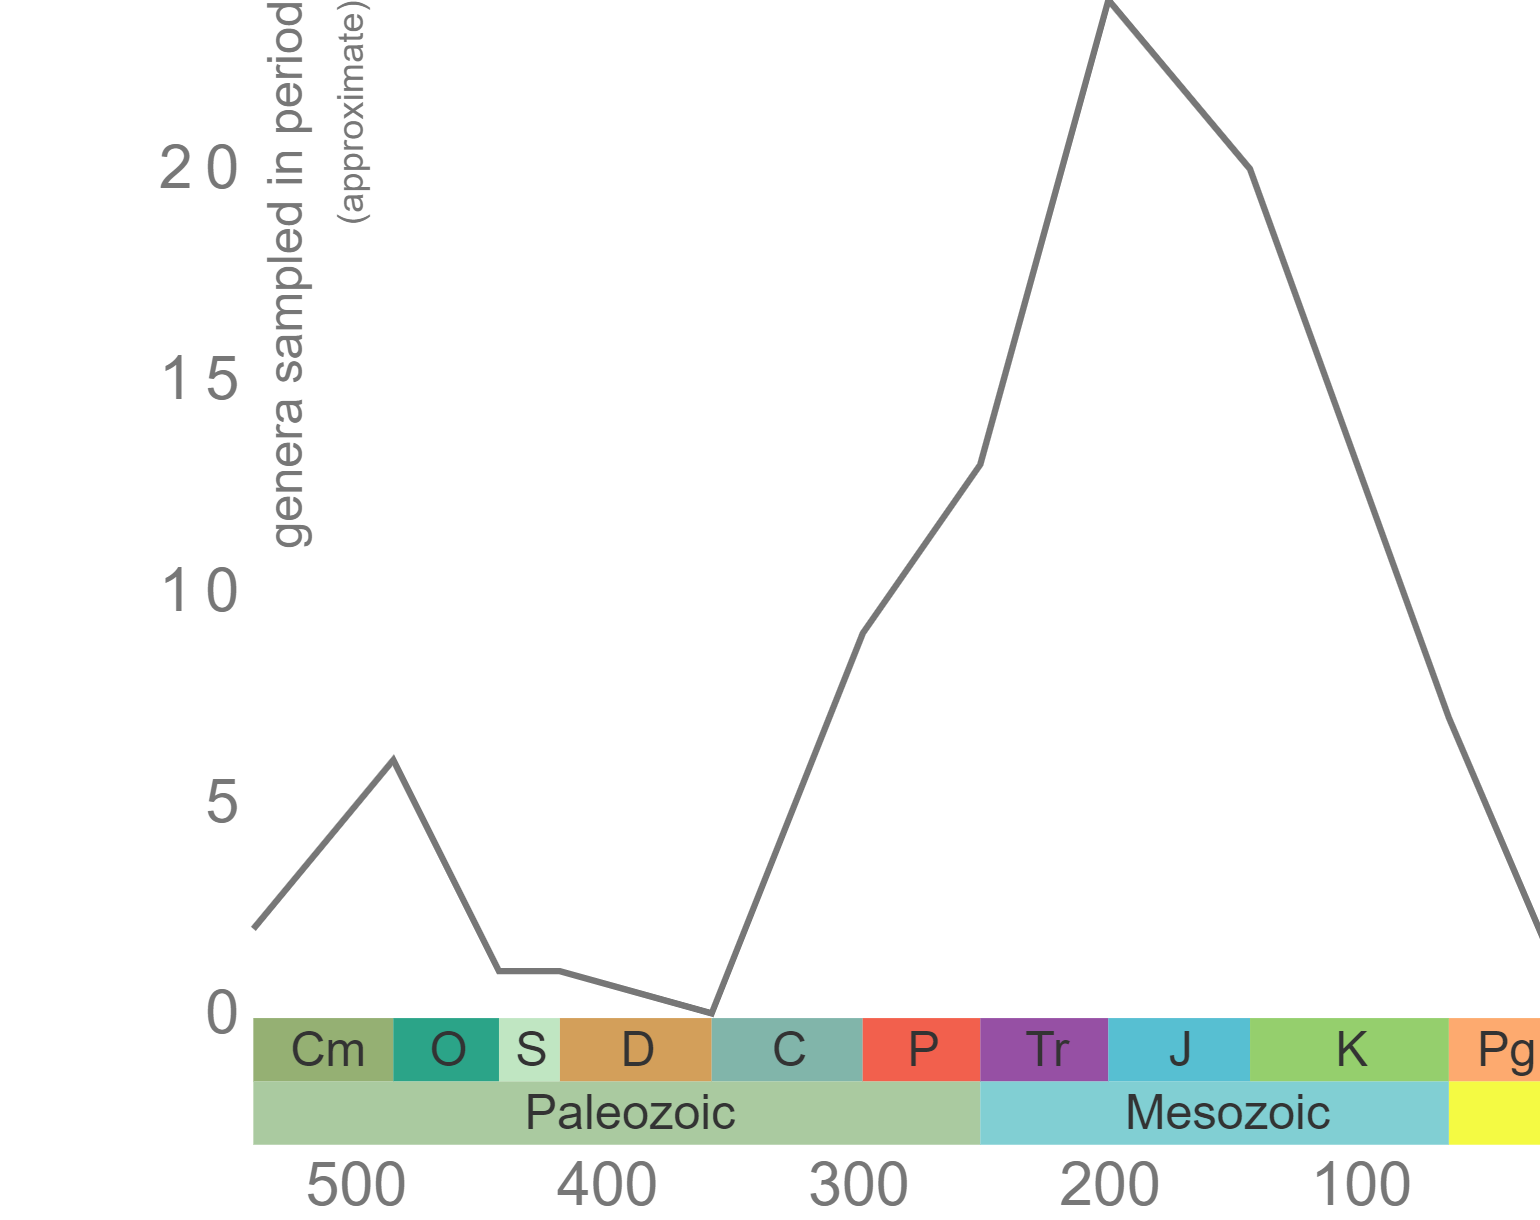 Graph of Phanerozoic genus-level diversity of Calcarea